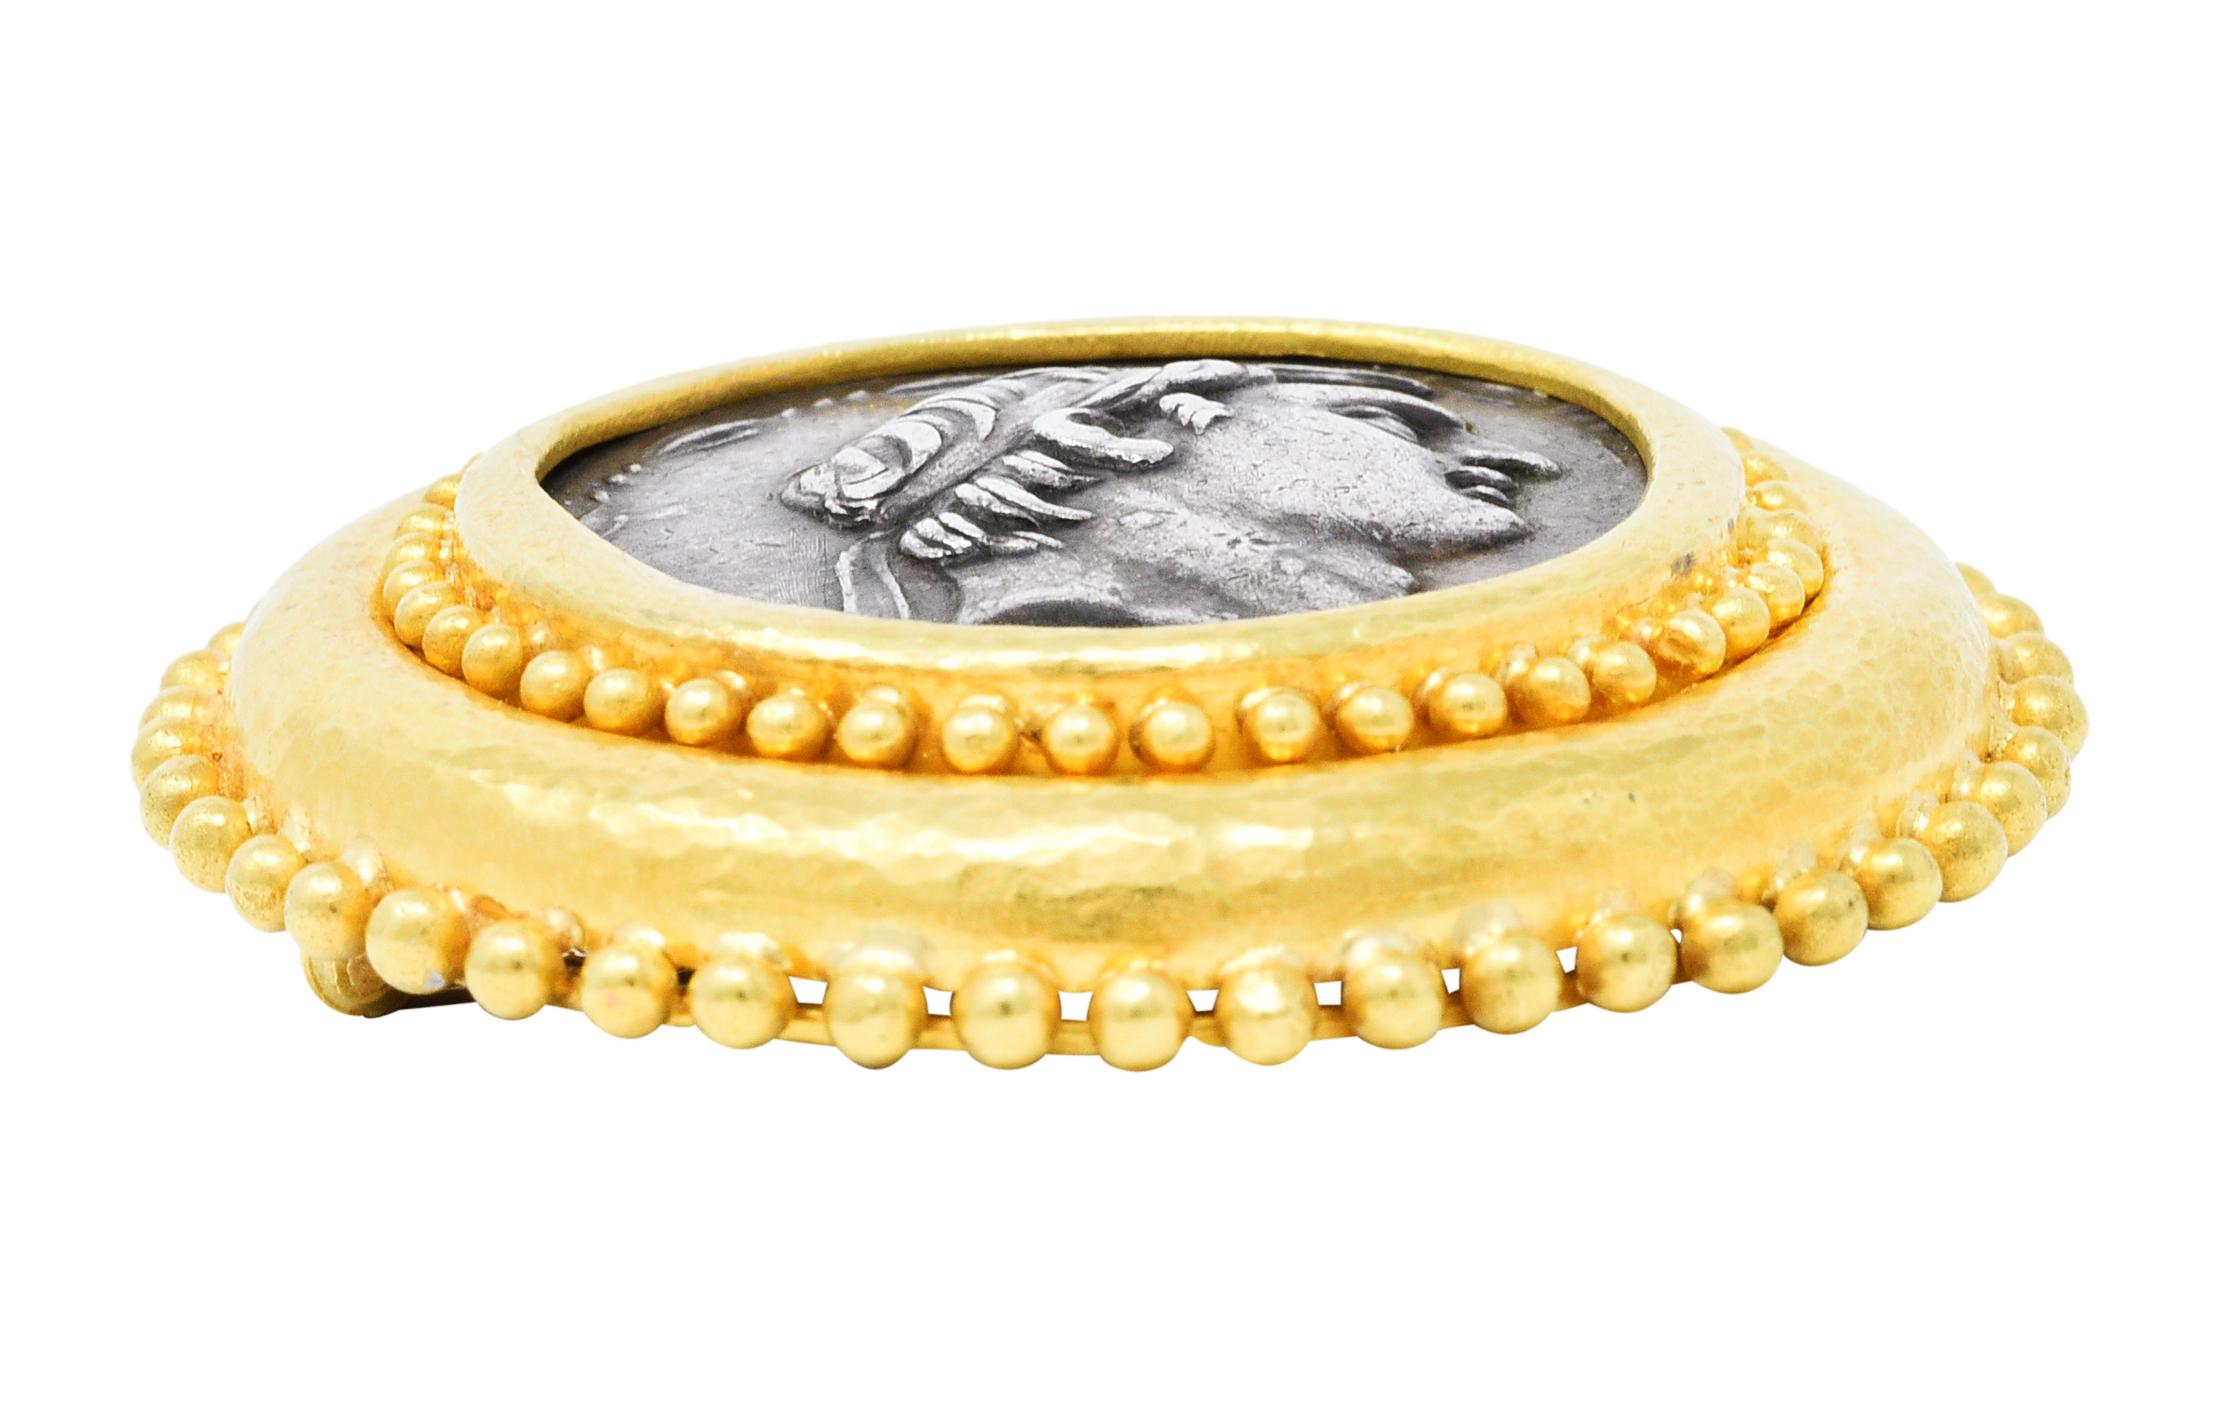 Large Elizabeth Locke Silver 18 Karat Gold Greek Ancient Coin Pendant Brooch 2